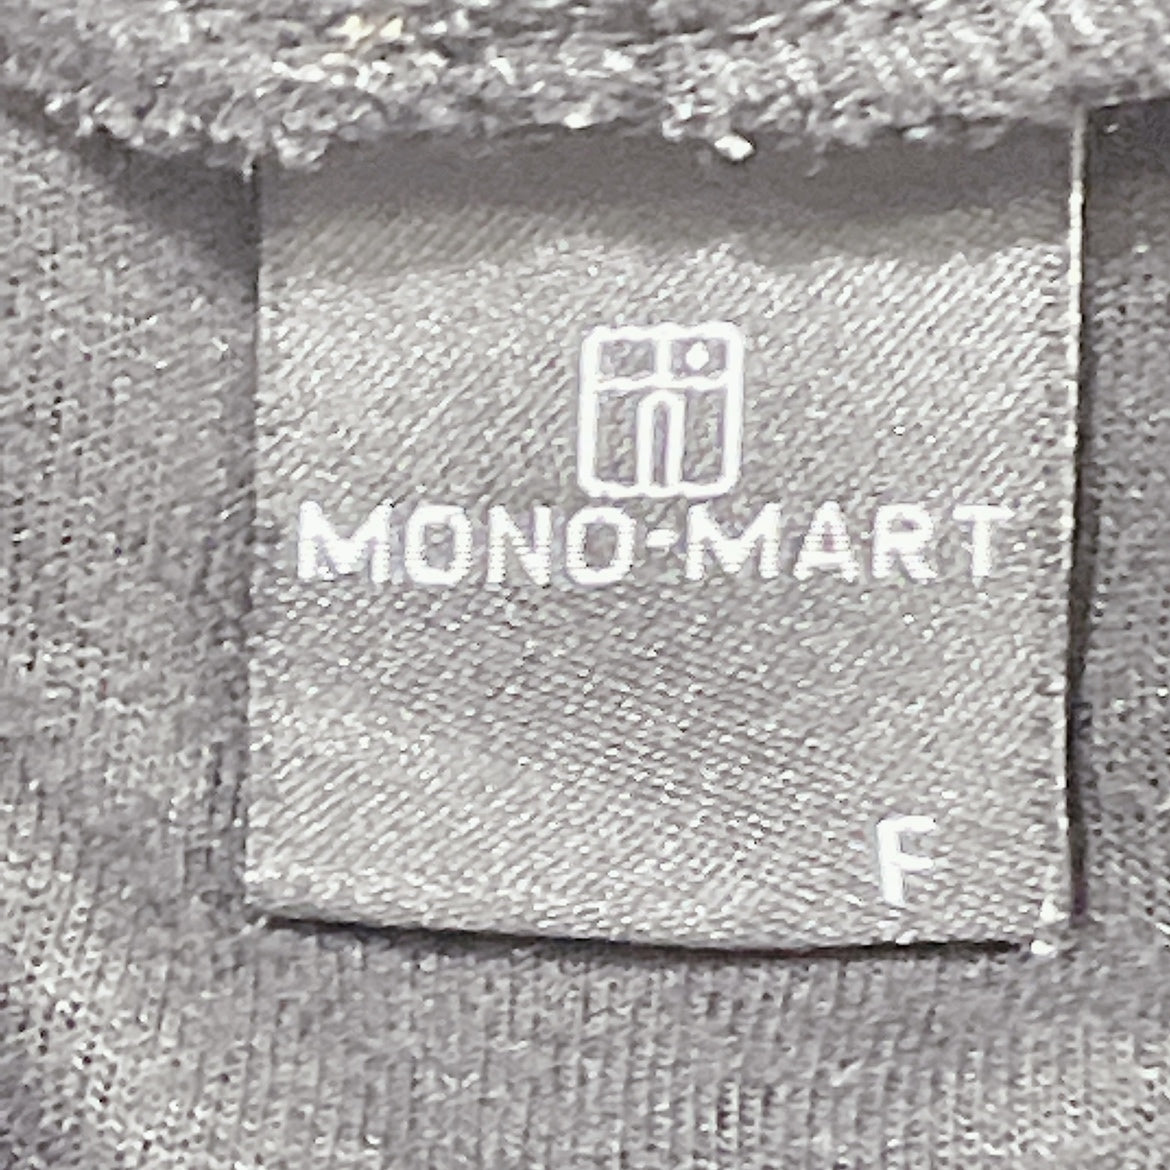 【22268】 MONO-MART モノマート パーカー 黒 ブラック F フード付き 無地 シンプル 普段着 定番 春 訳あり品